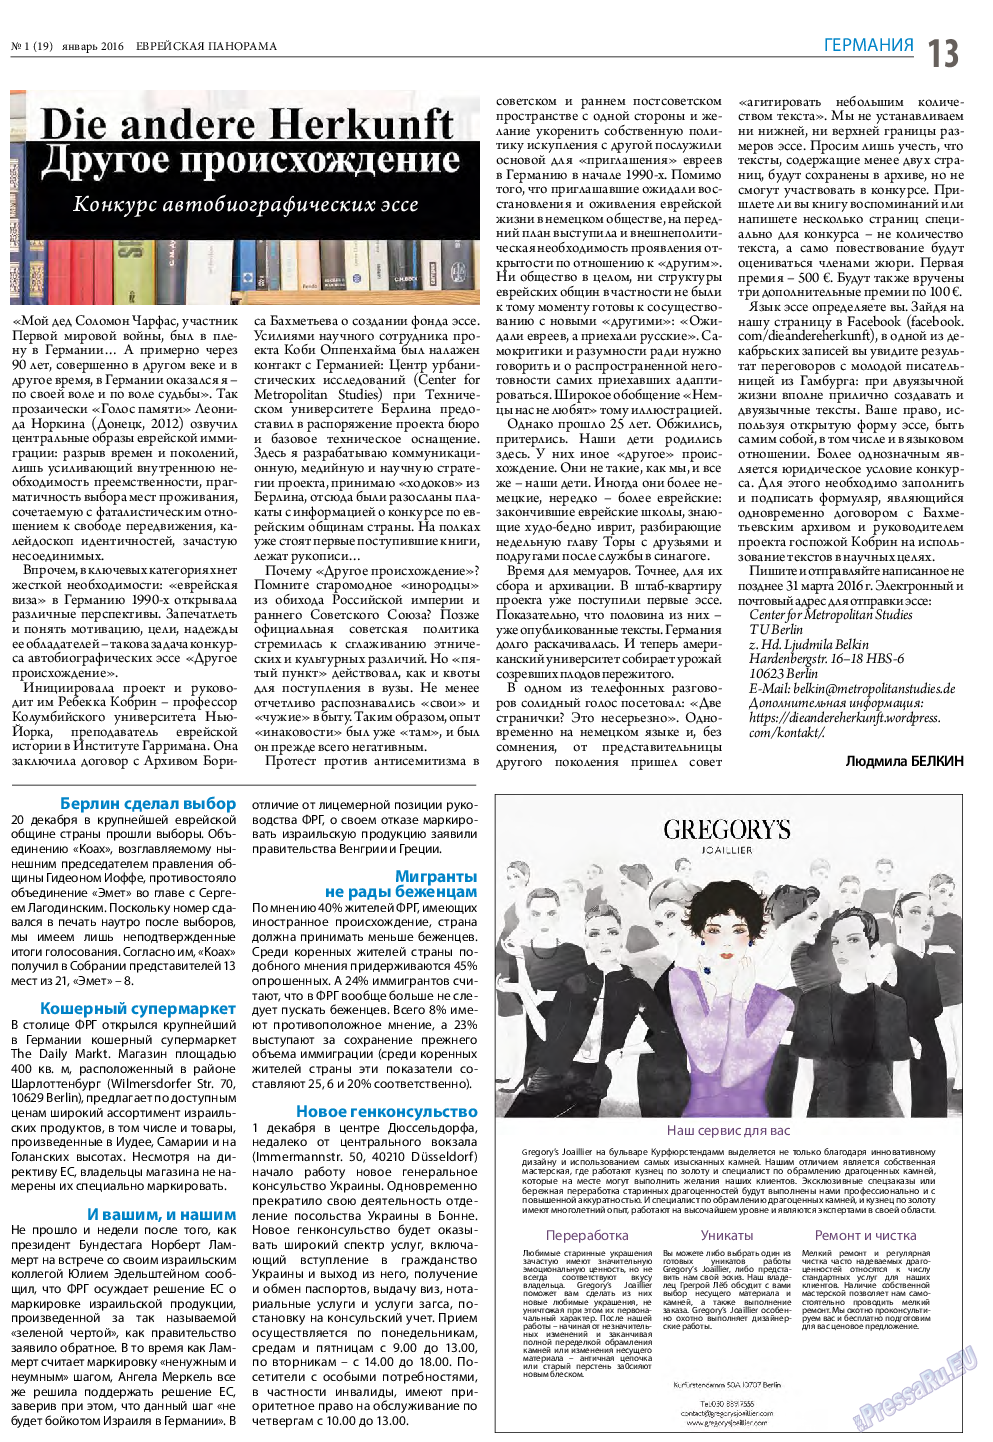 Еврейская панорама, газета. 2016 №1 стр.13